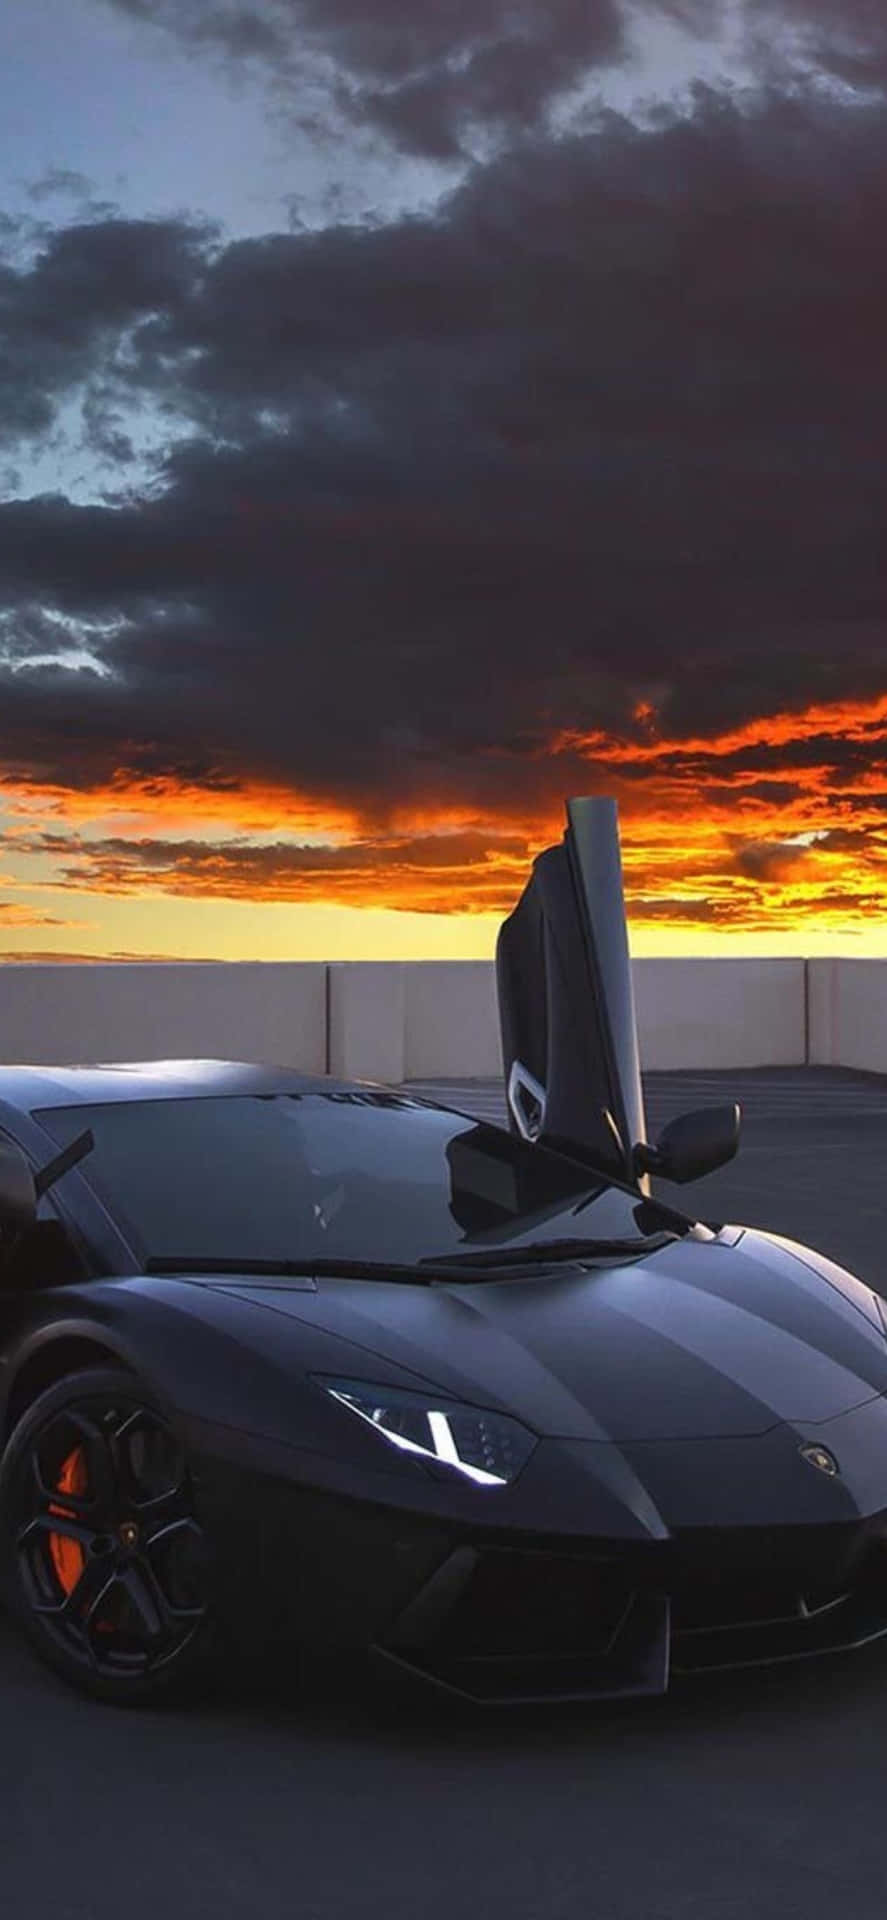 iPhone XS Max Lamborghini Black Aventador Background